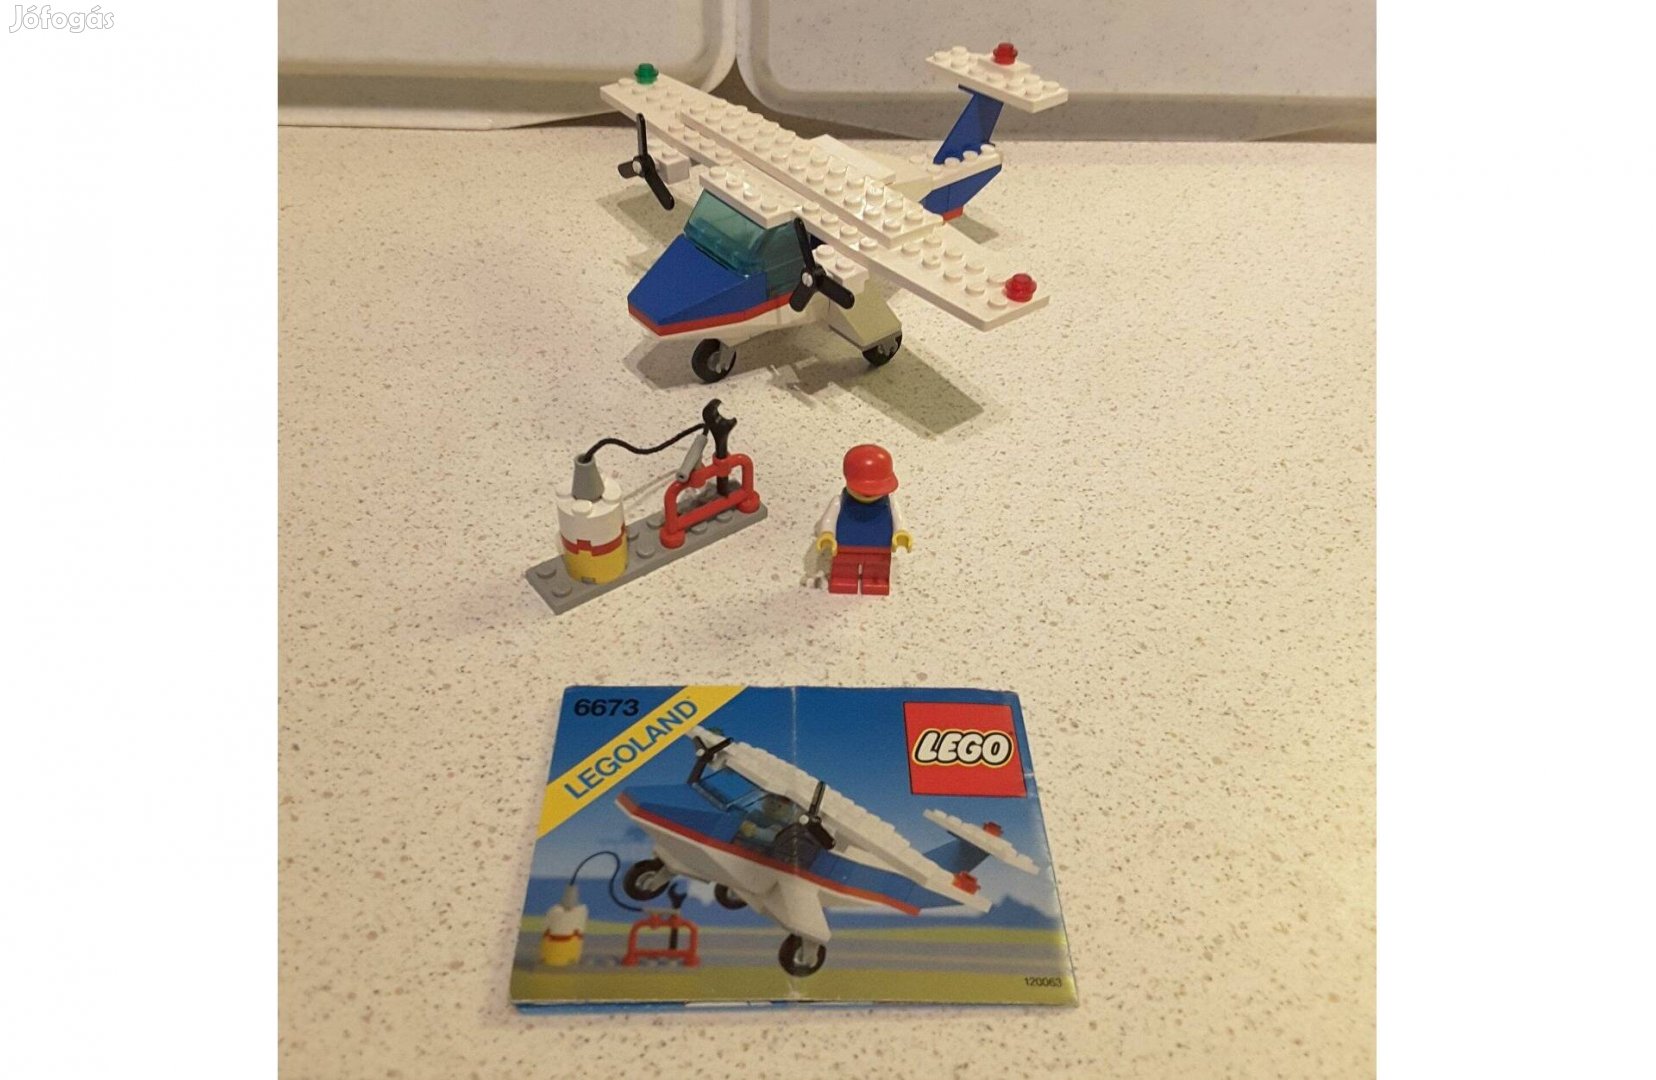 Lego 6673 Repülőgép / Solo trainer + leírás + dobozdarab